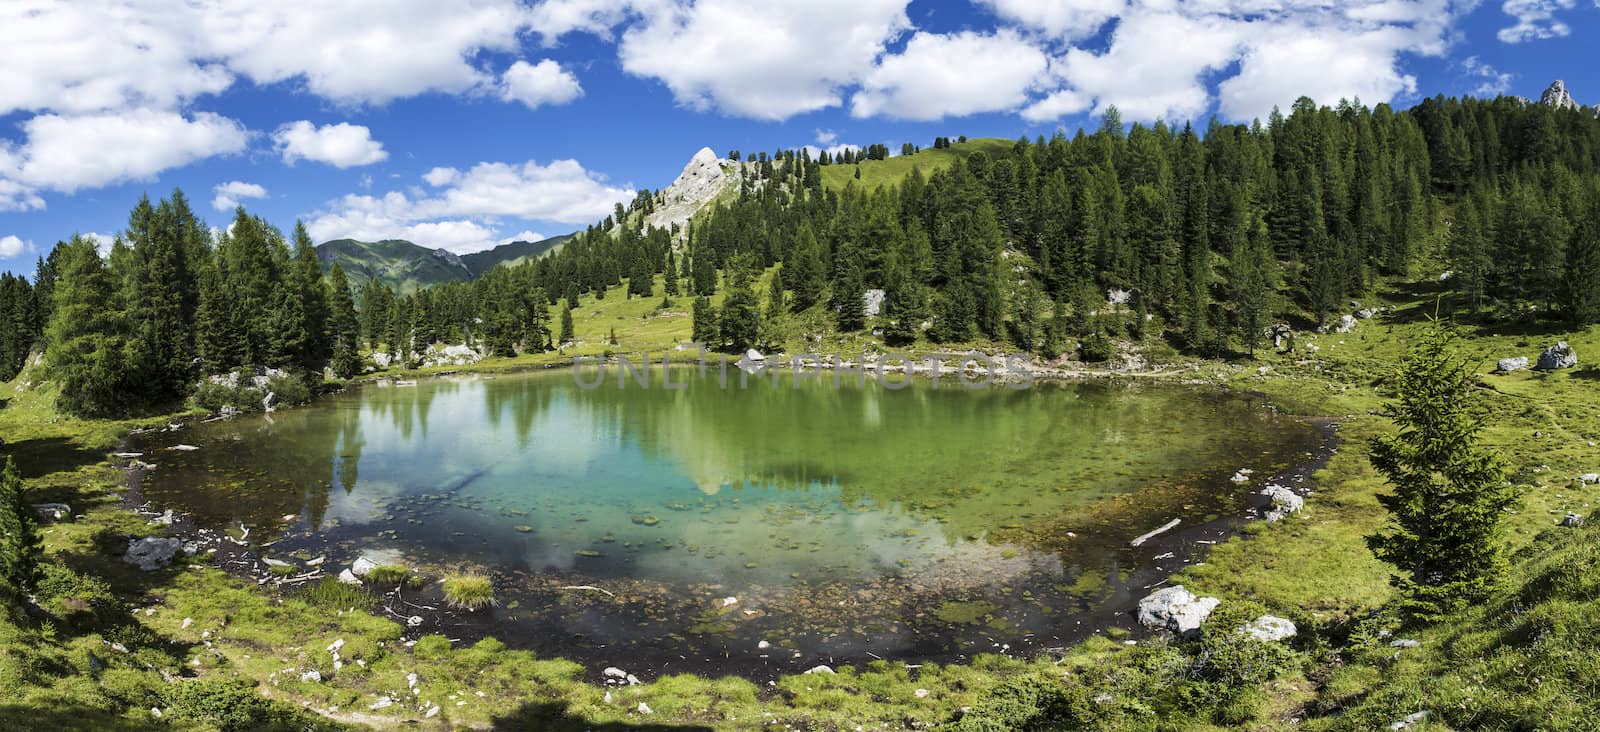 Lagusel Lake, Dolomiti - Italy by Mdc1970